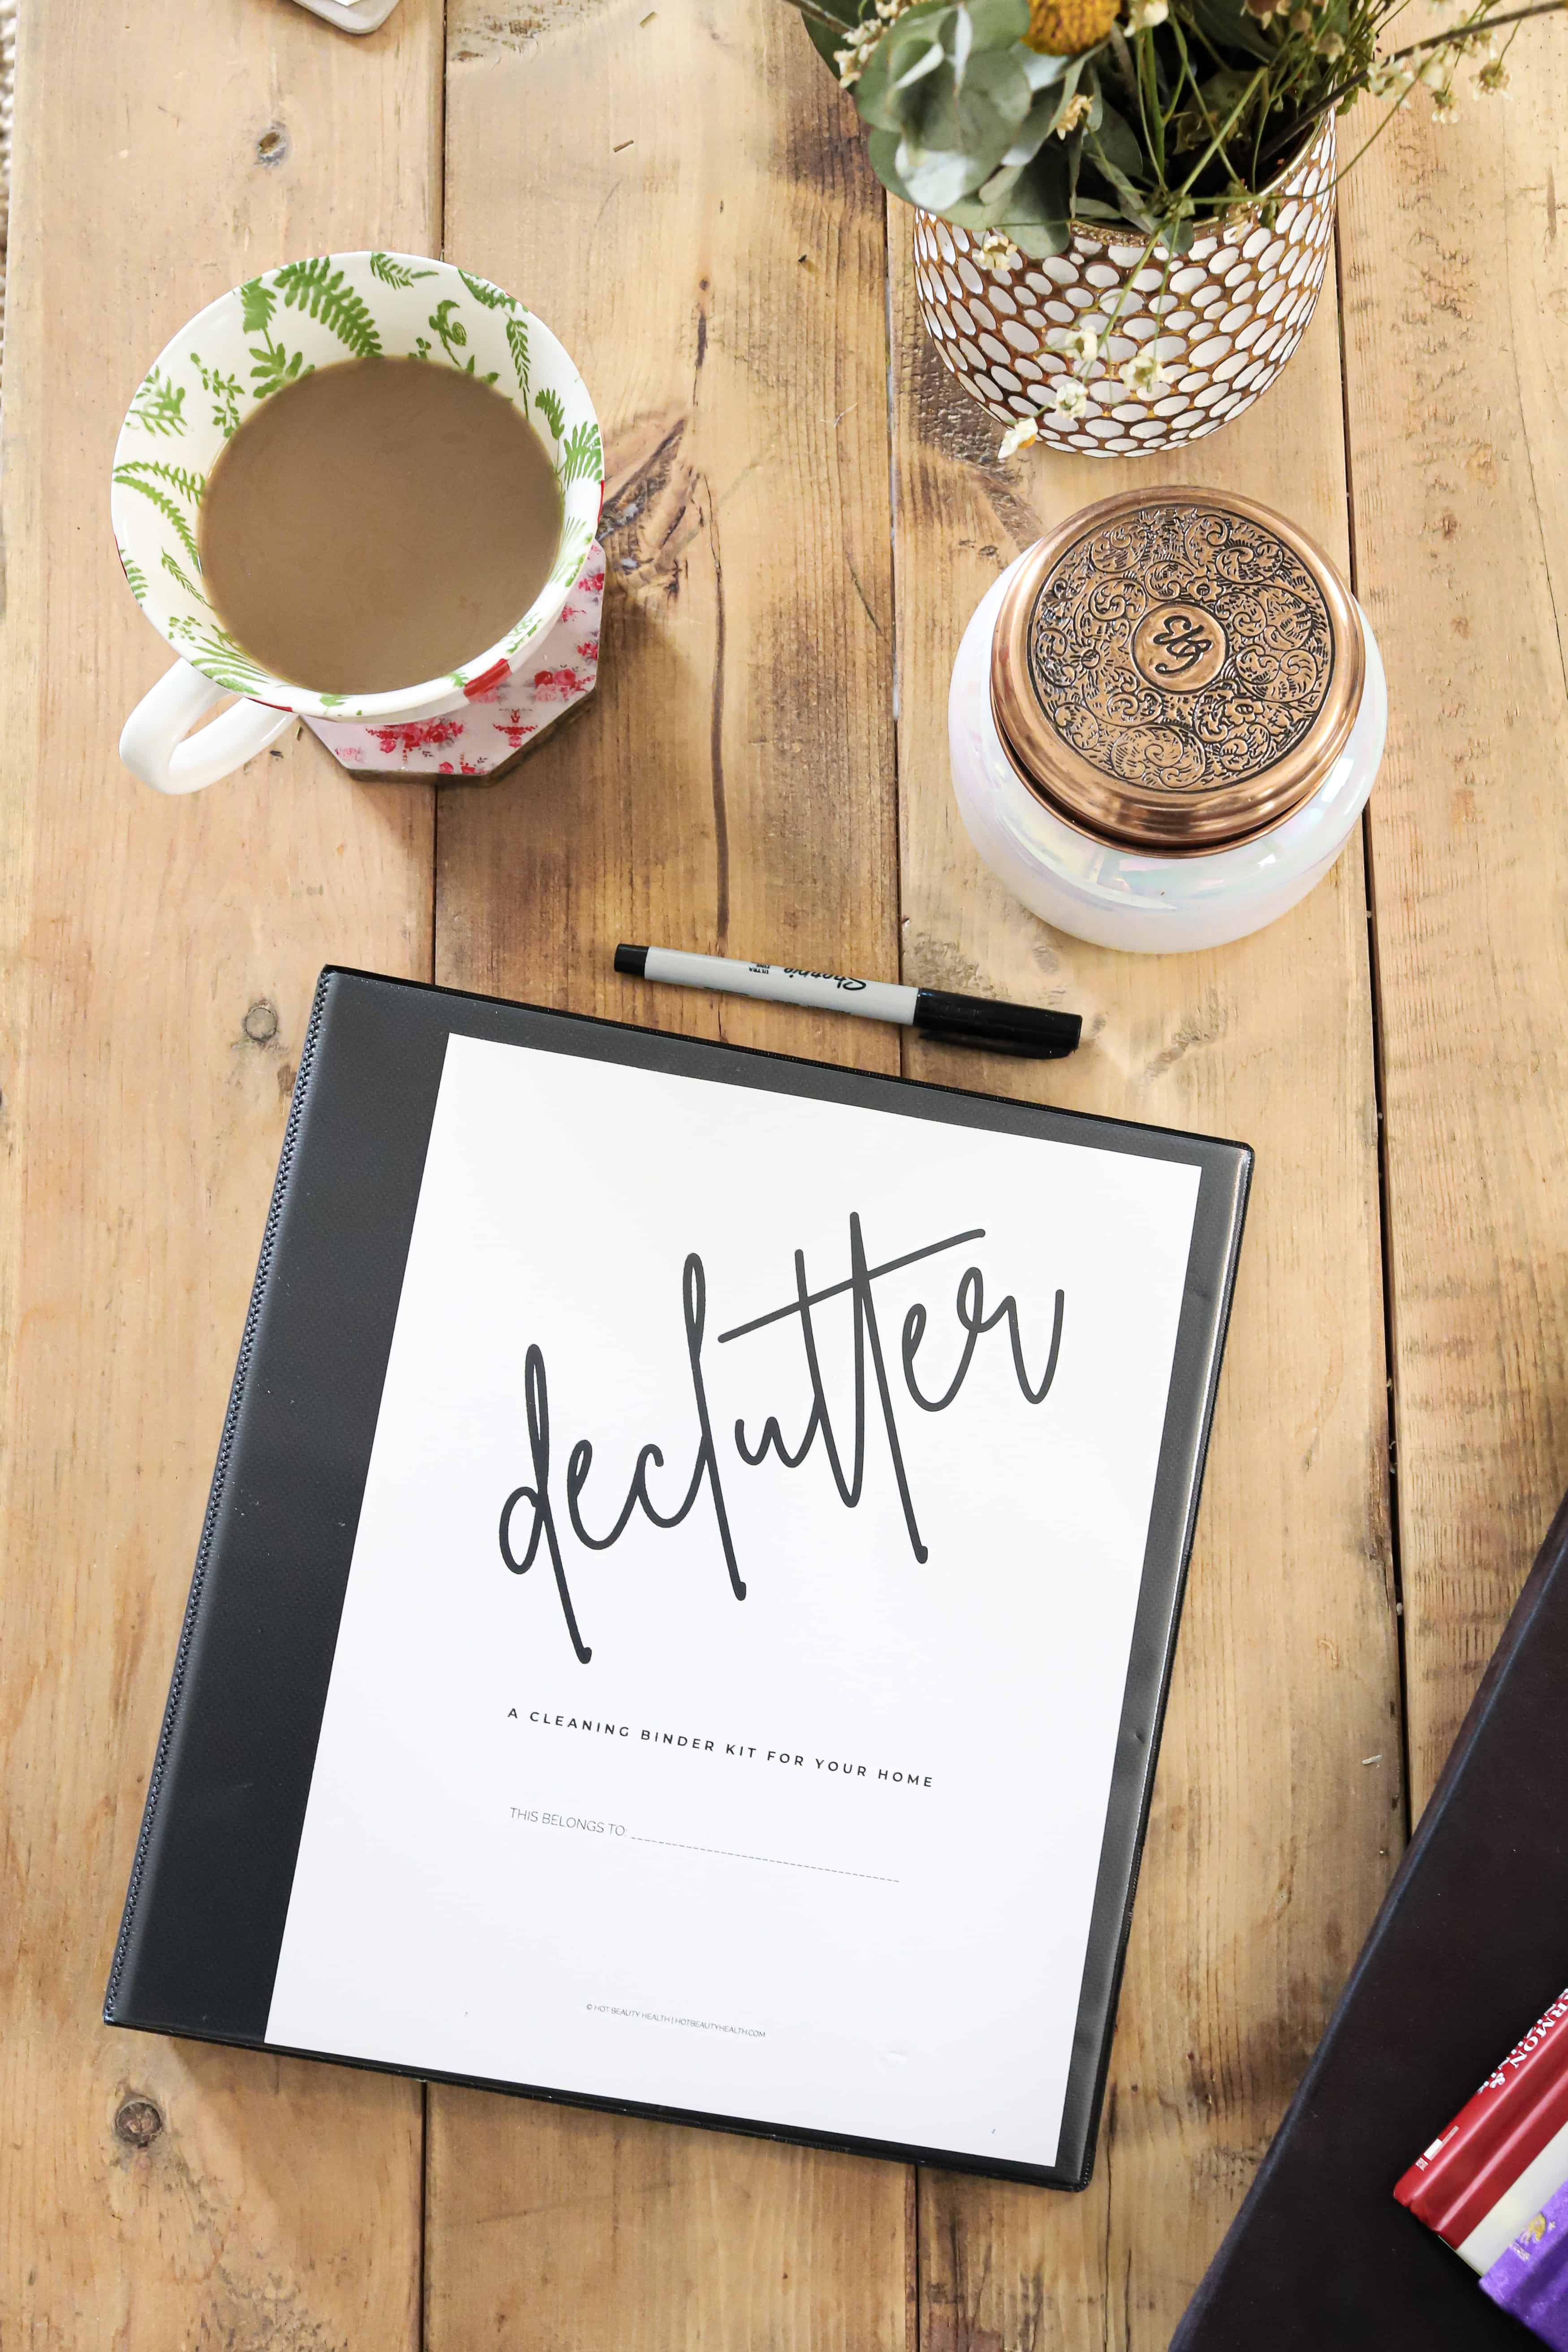 Declutter Binder Kit Printables – Have a Clutter-Free Home!